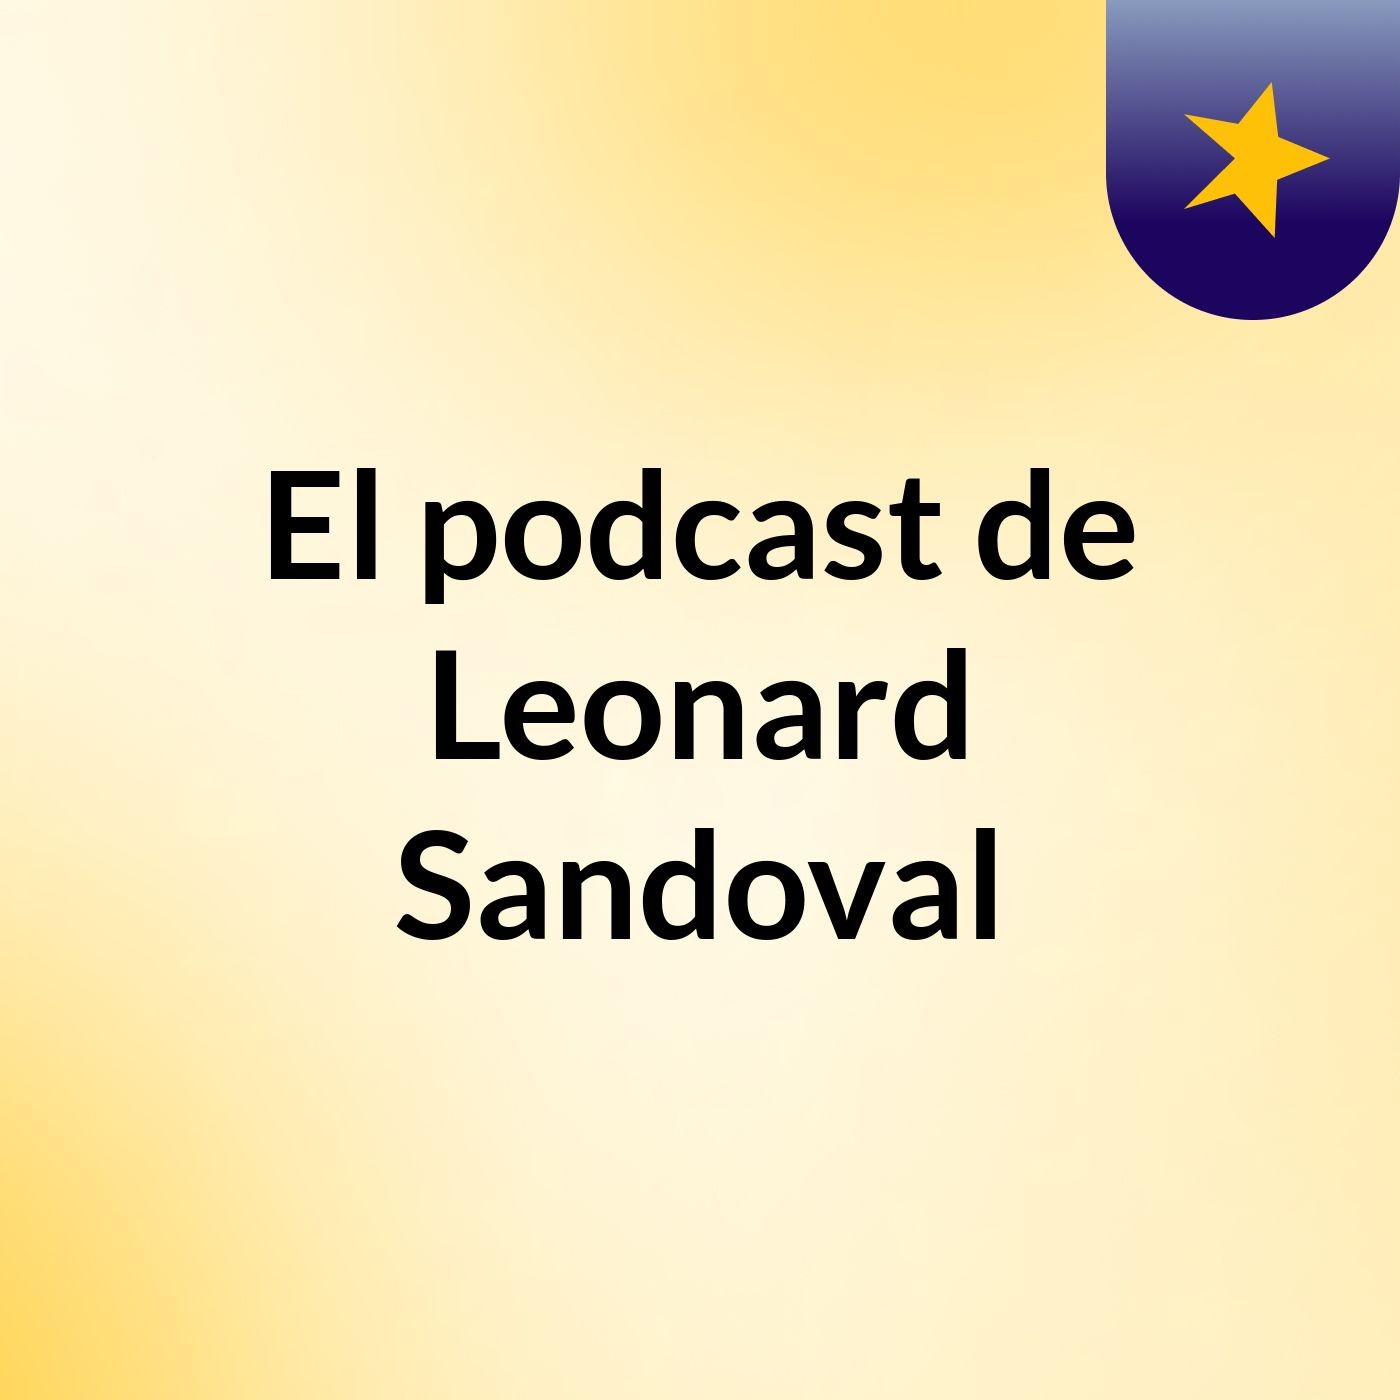 El podcast de Leonard Sandoval